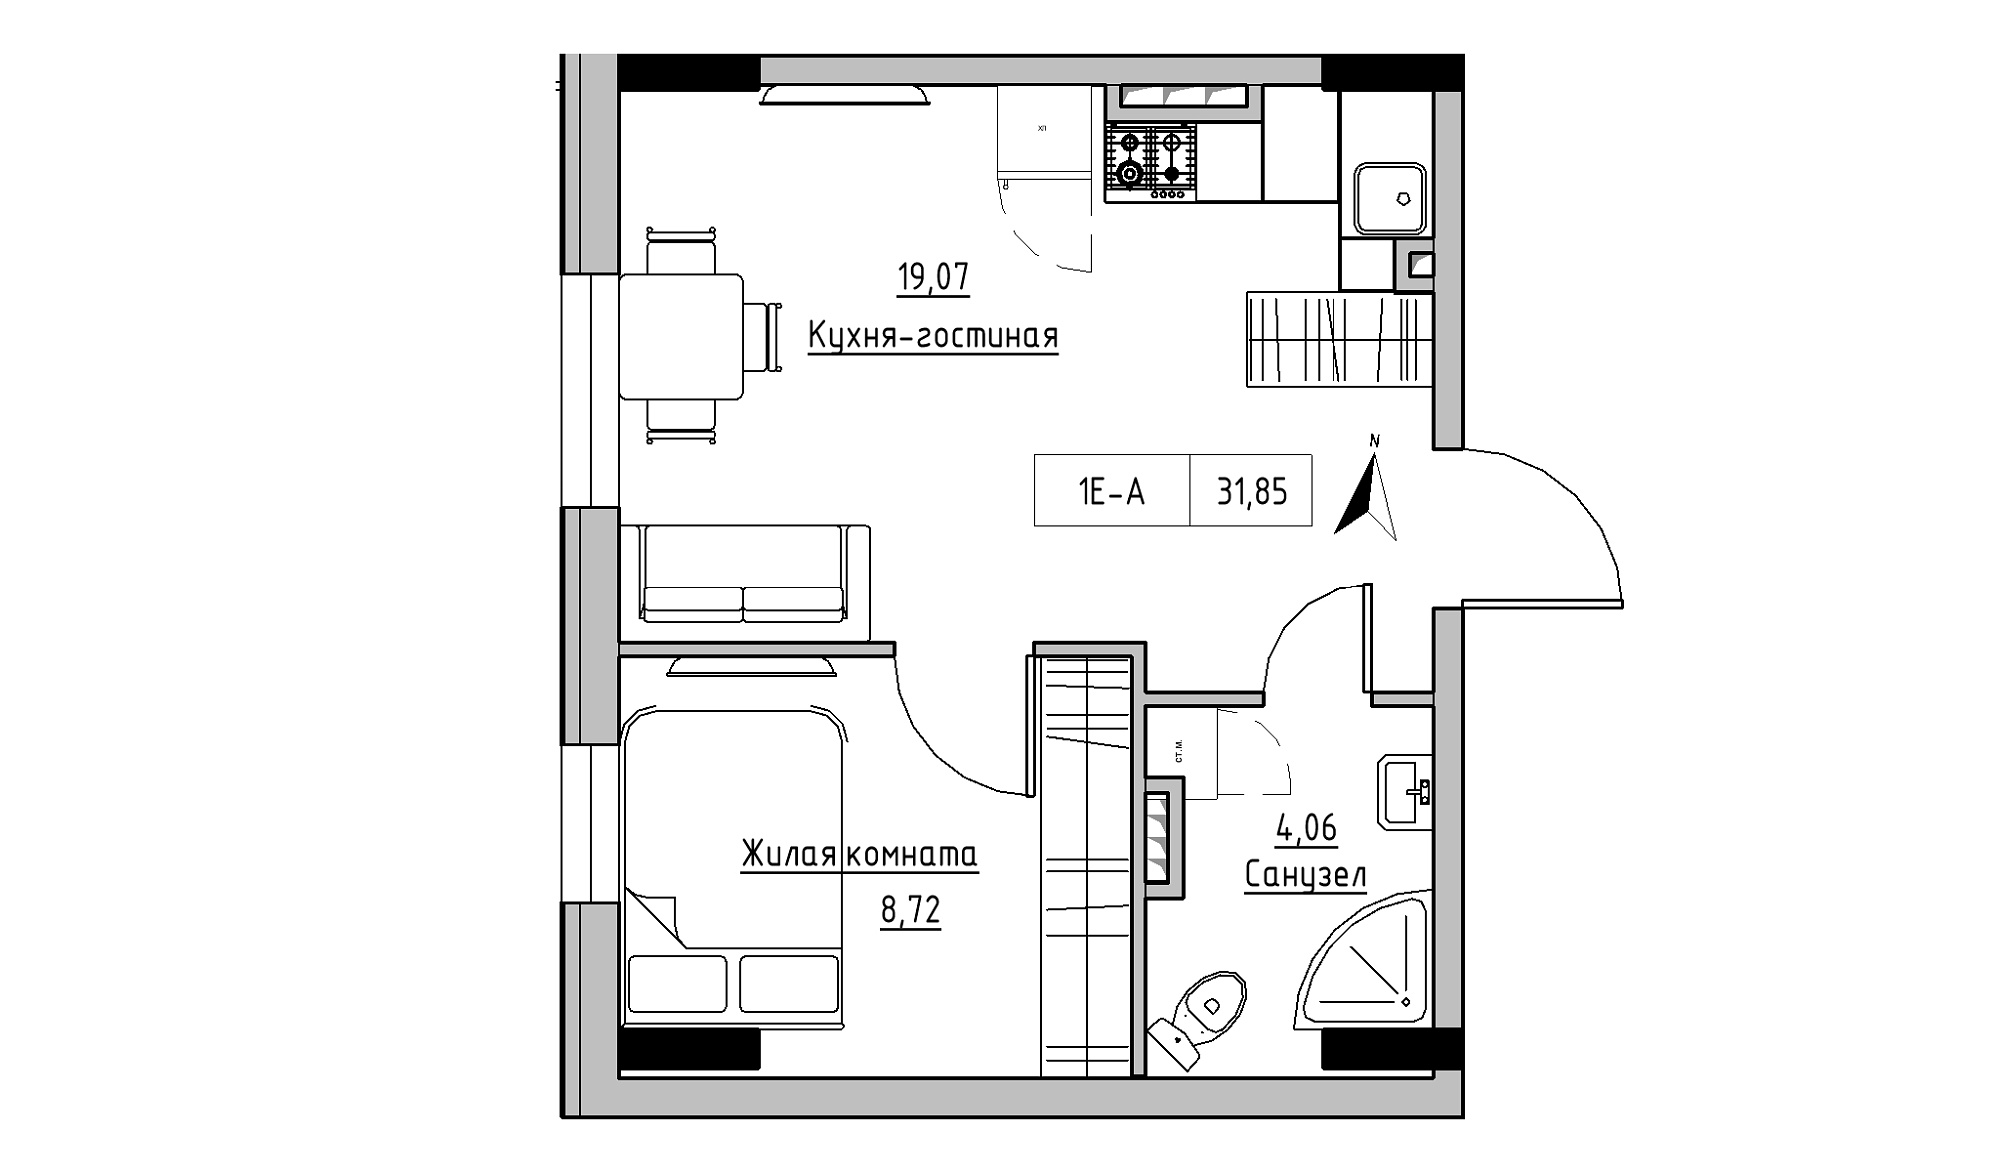 Planning 1-rm flats area 31.85m2, KS-025-03/0003.